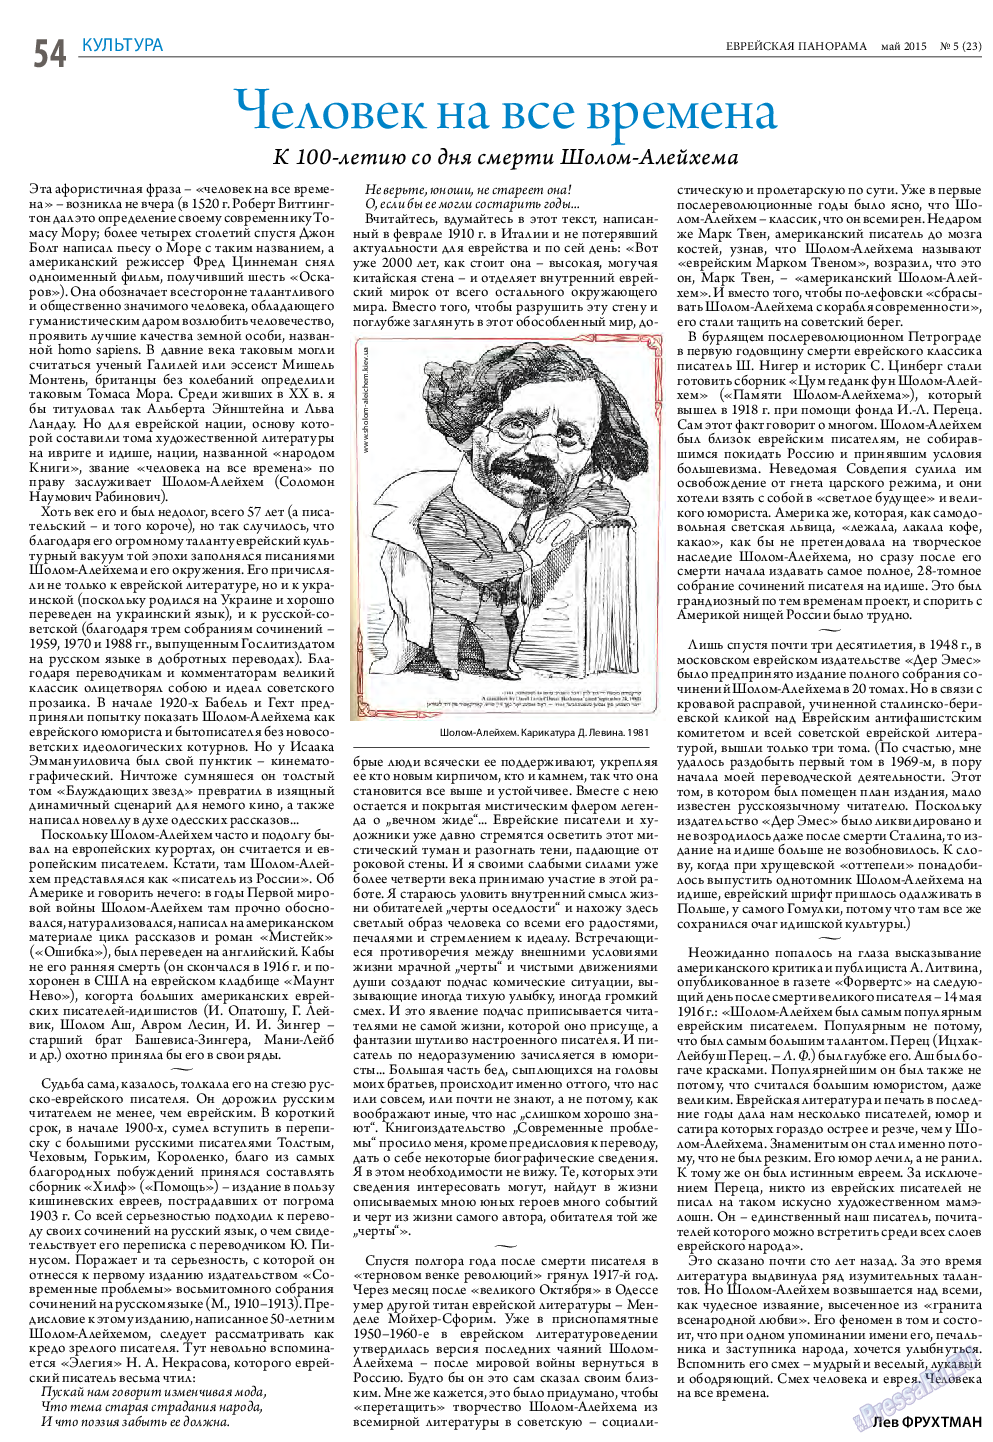 Еврейская панорама, газета. 2016 №5 стр.54